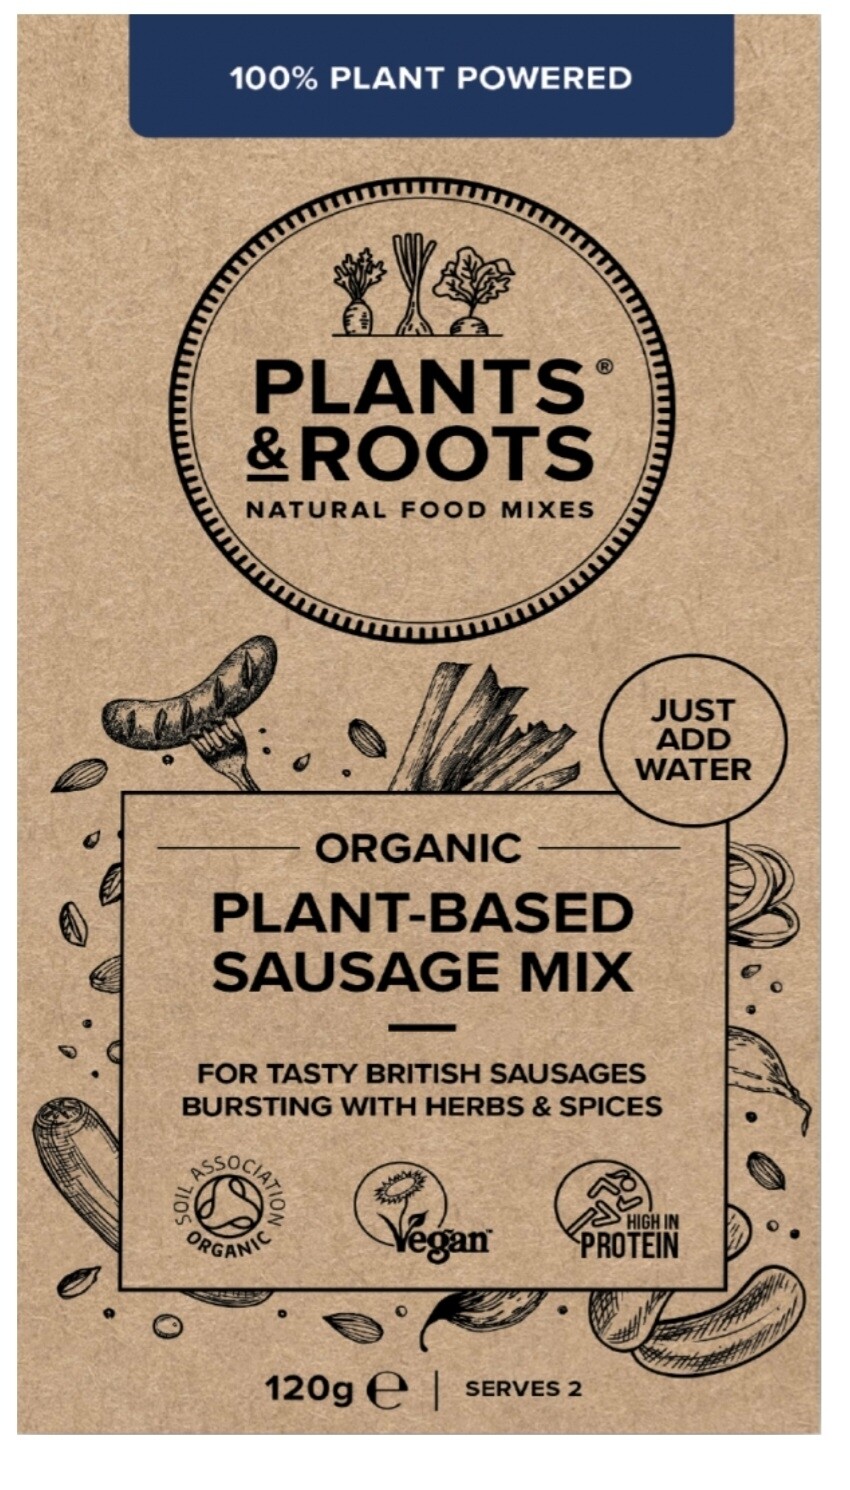 Plant-Based Sausage Mix